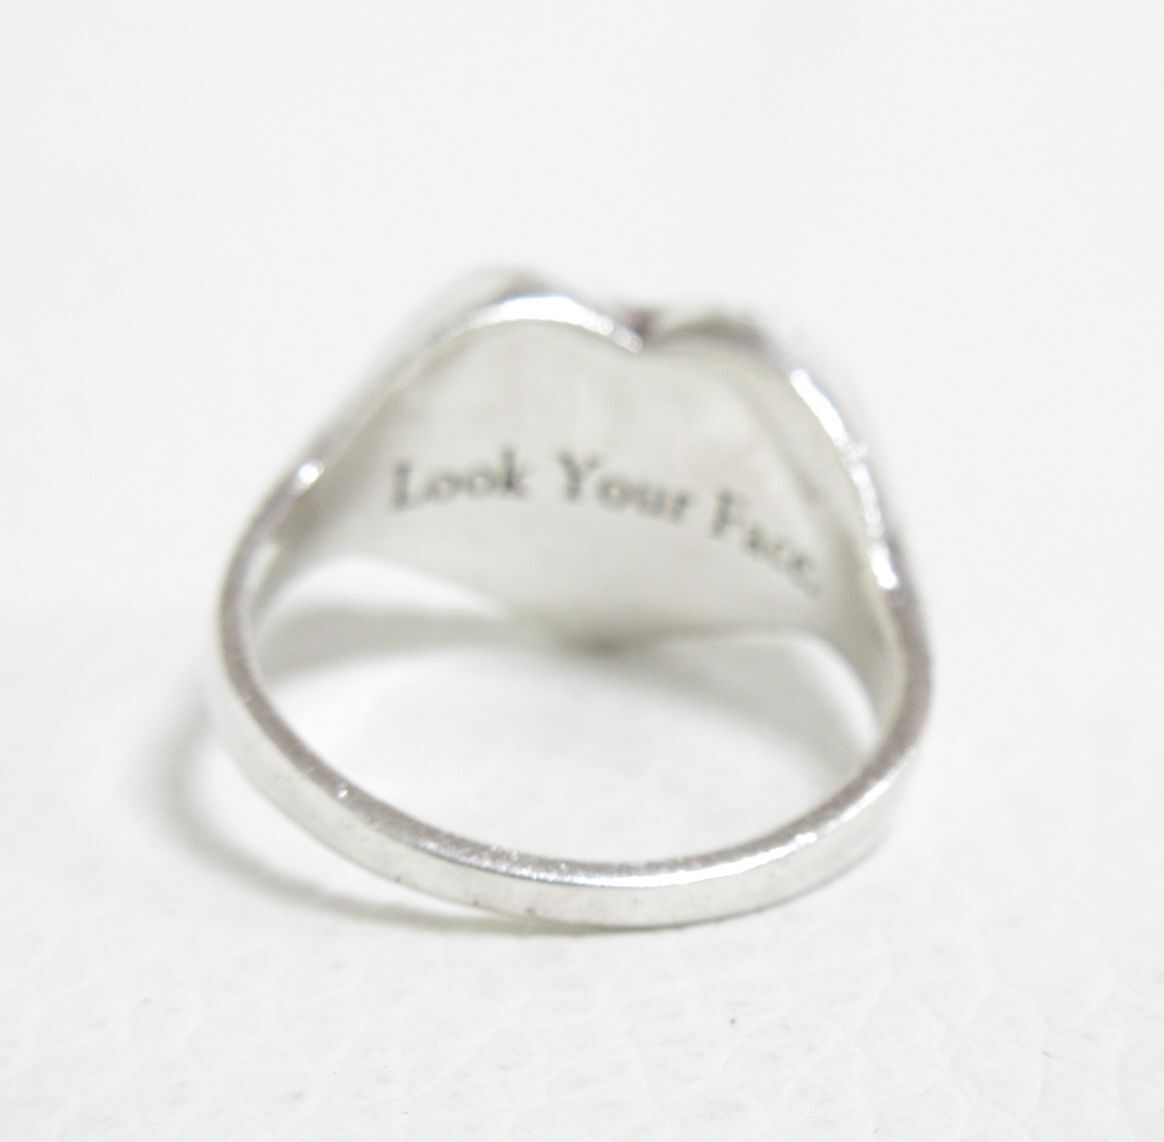 12621*[SALE]TATTOO STUDIO YAMADAta палец на ноге Studio yamada Heart Logo кольцо / кольцо [ примерно 13 номер ] серебряный б/у USED